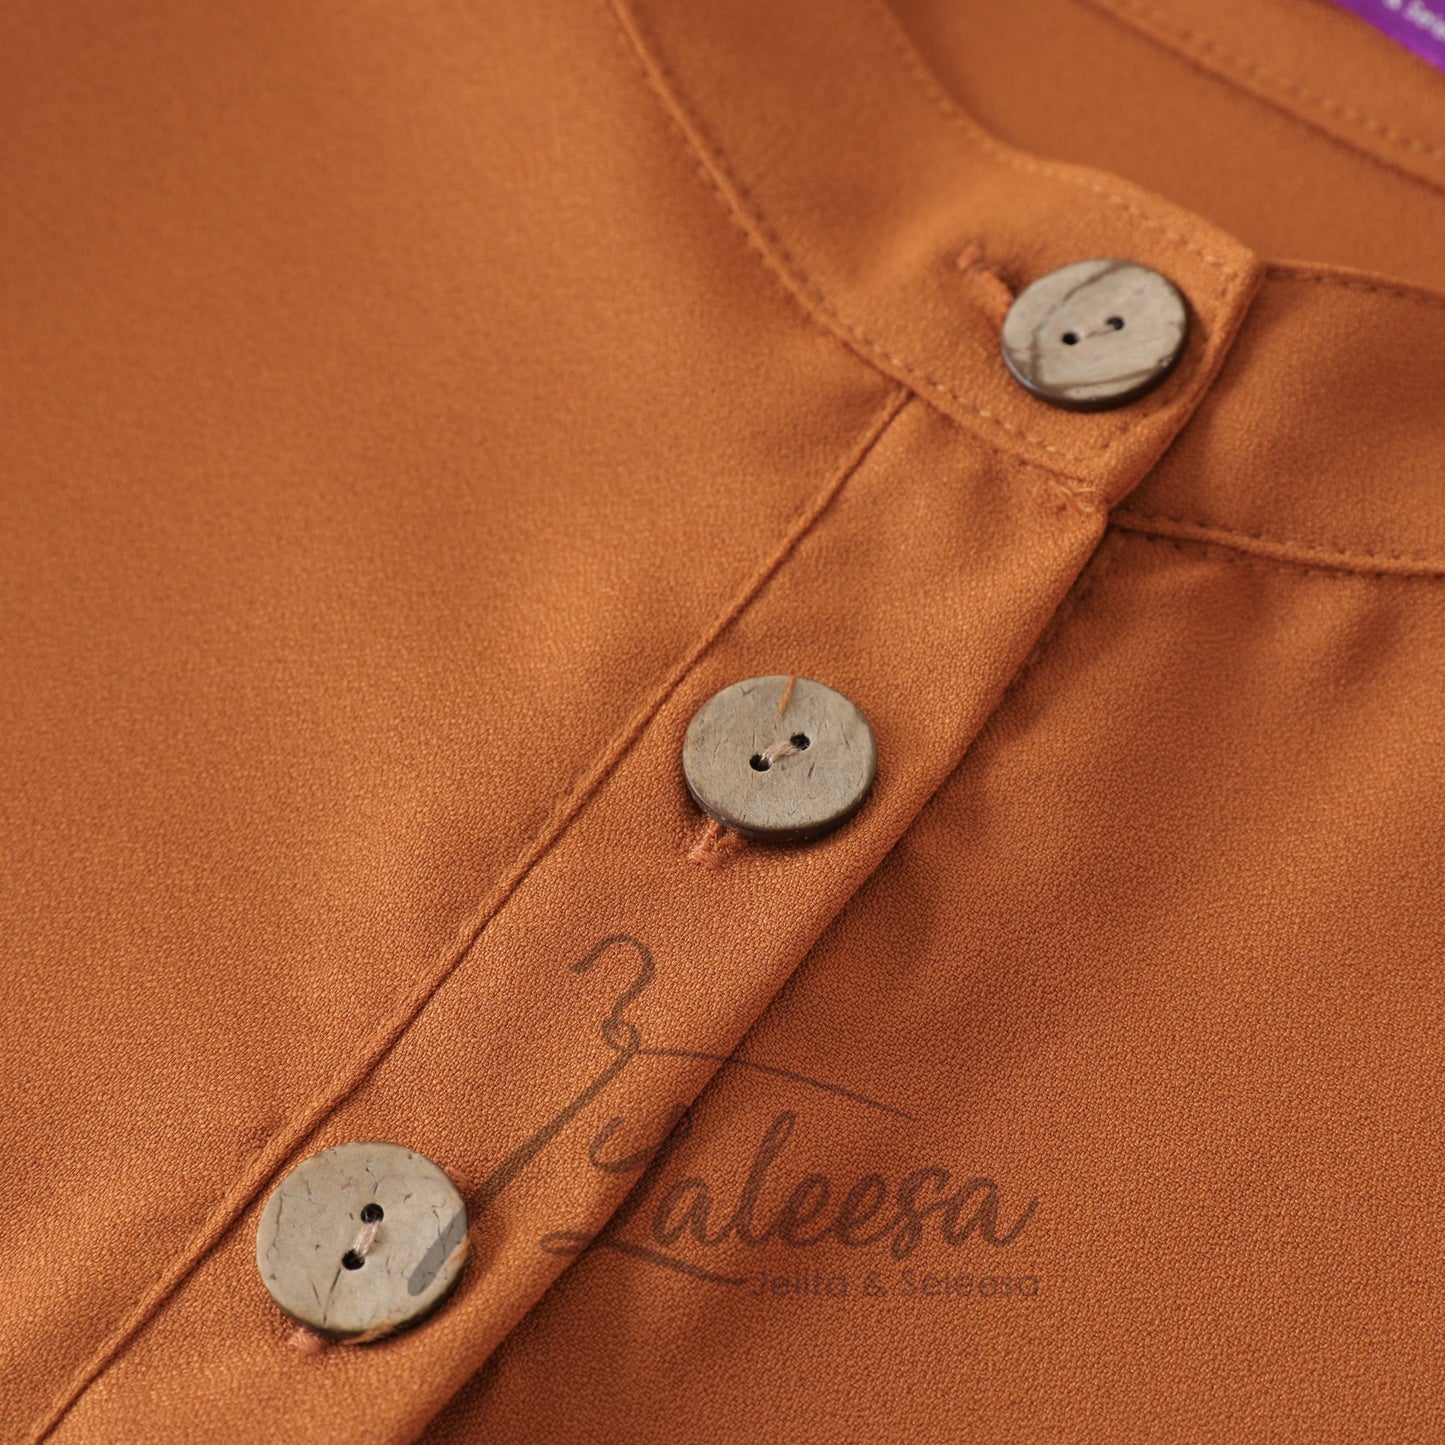 LALEESA (Blouse + Pants) SET KHASHIA SW849856 <BF Friendly Series> 2 Piece Modest Set Wear Plus Size Baju Raya 2024